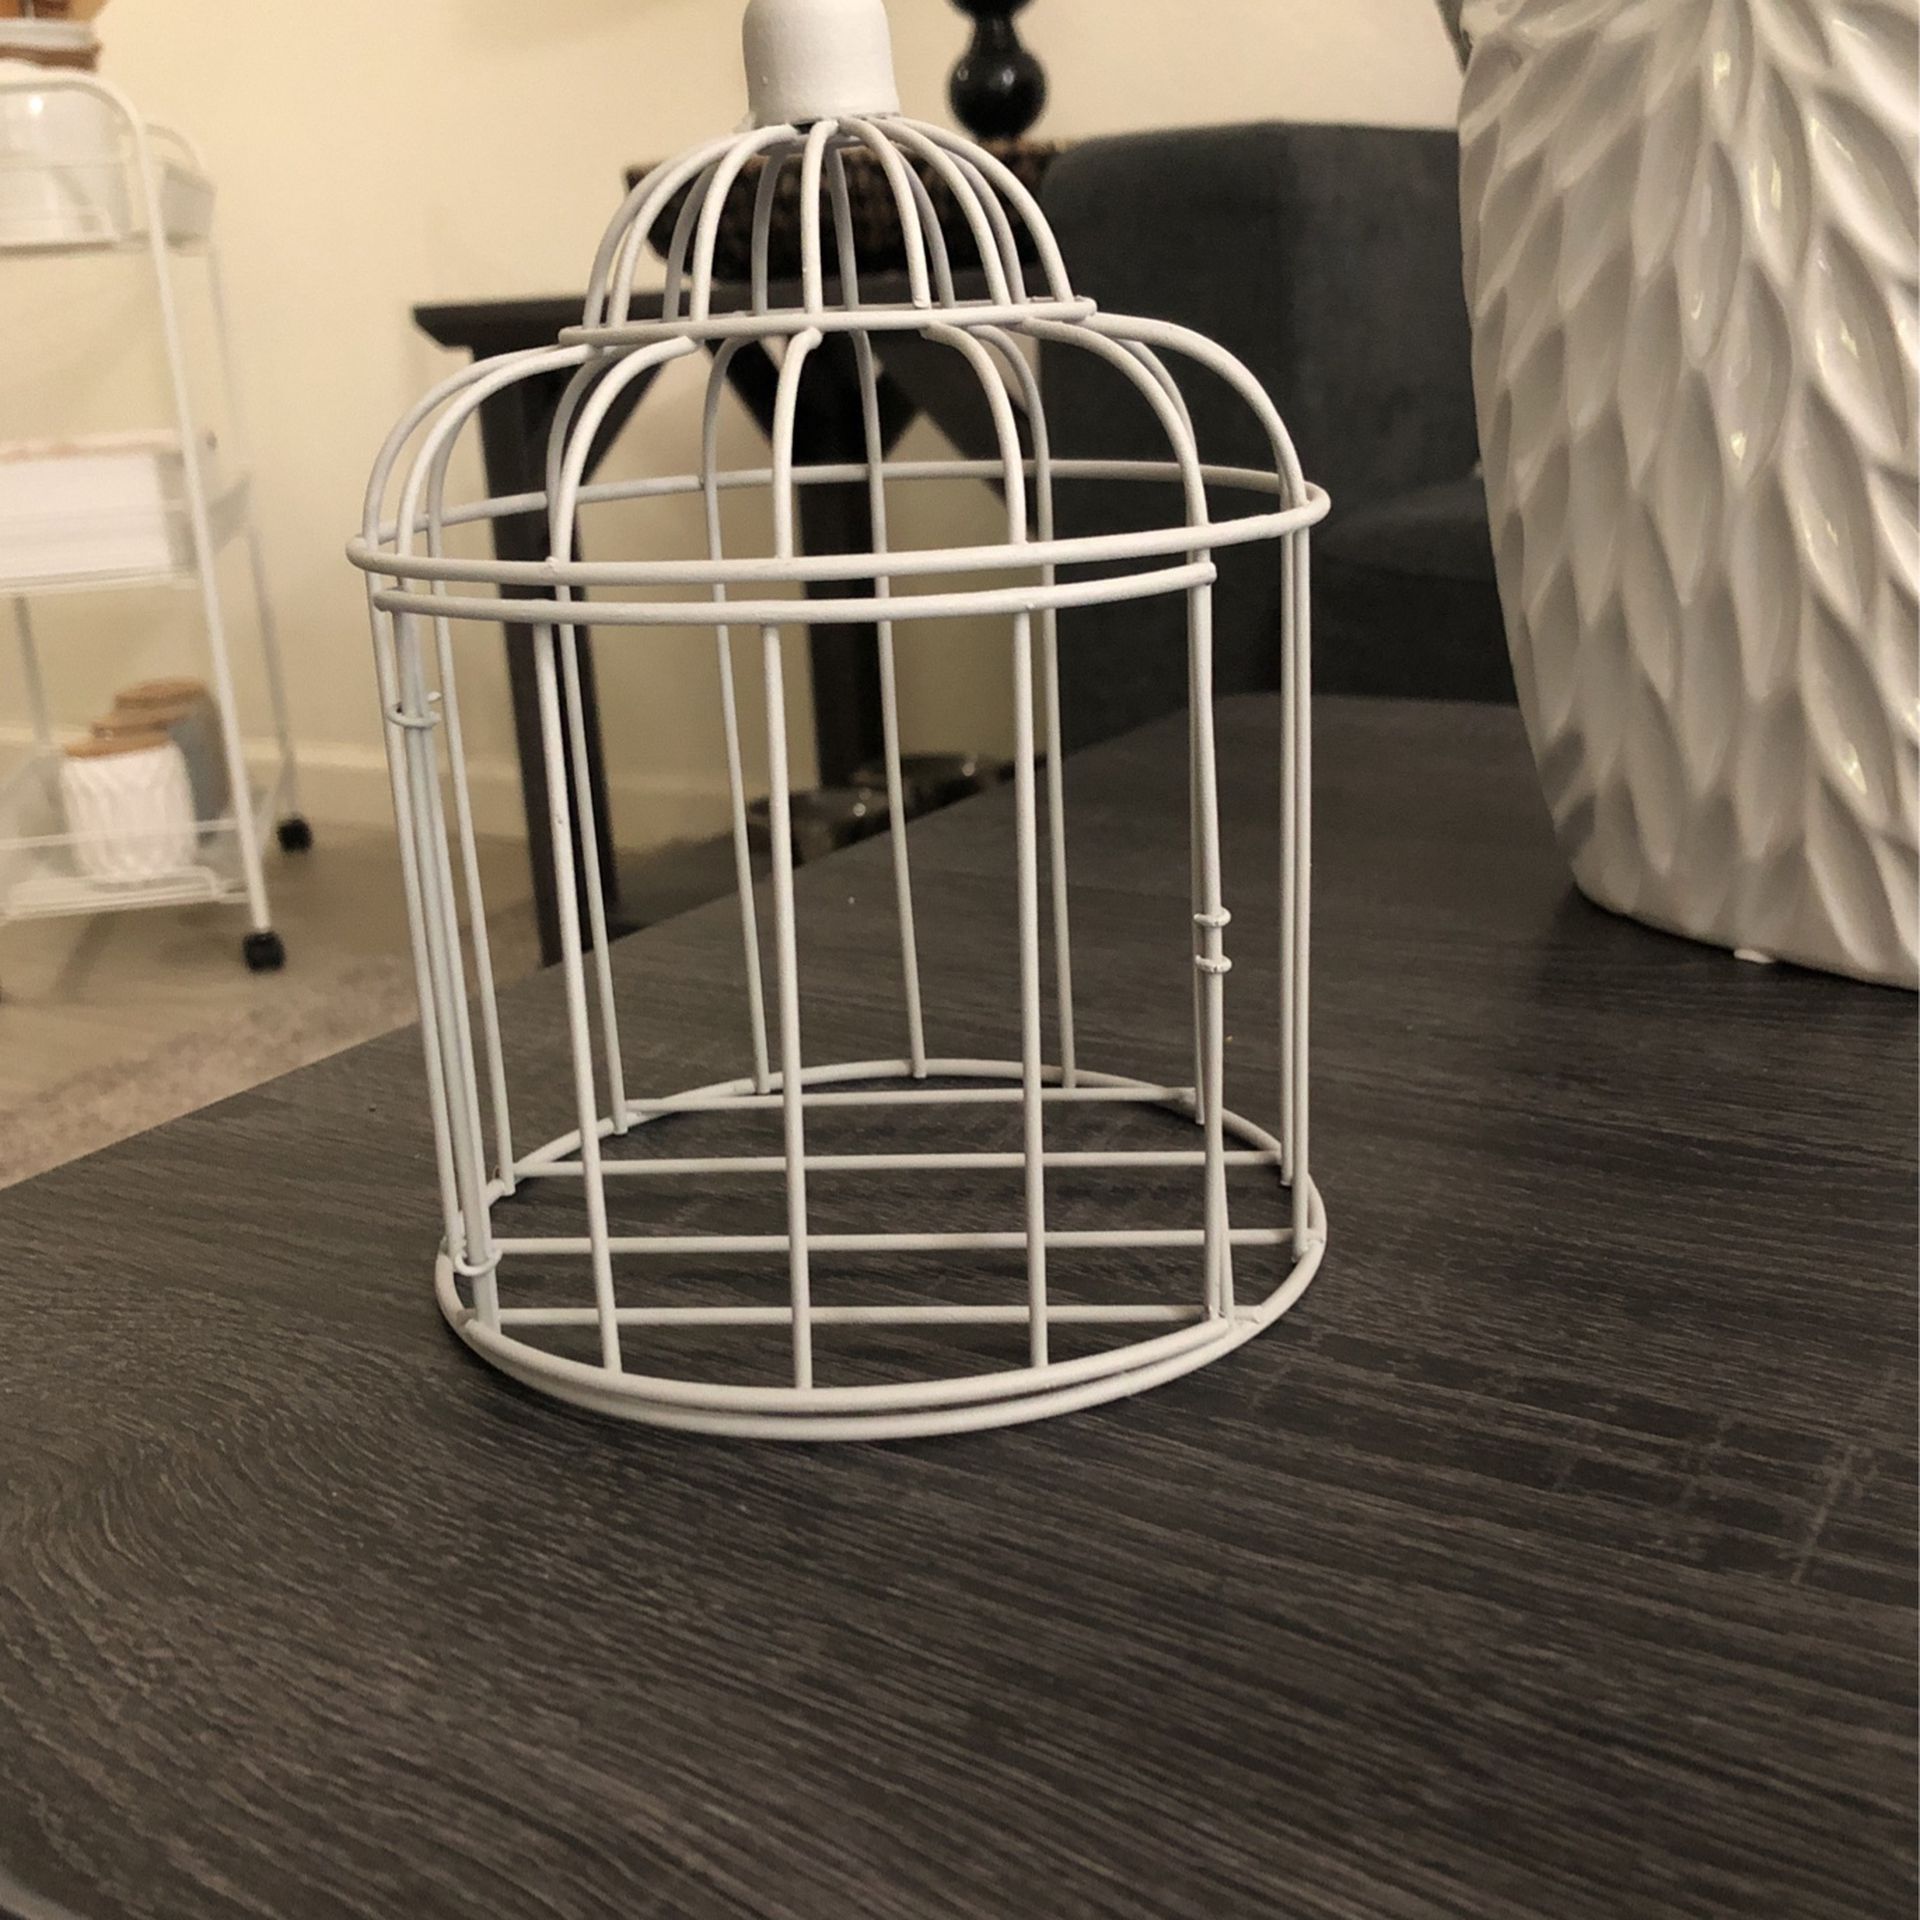 Small bird Cage 